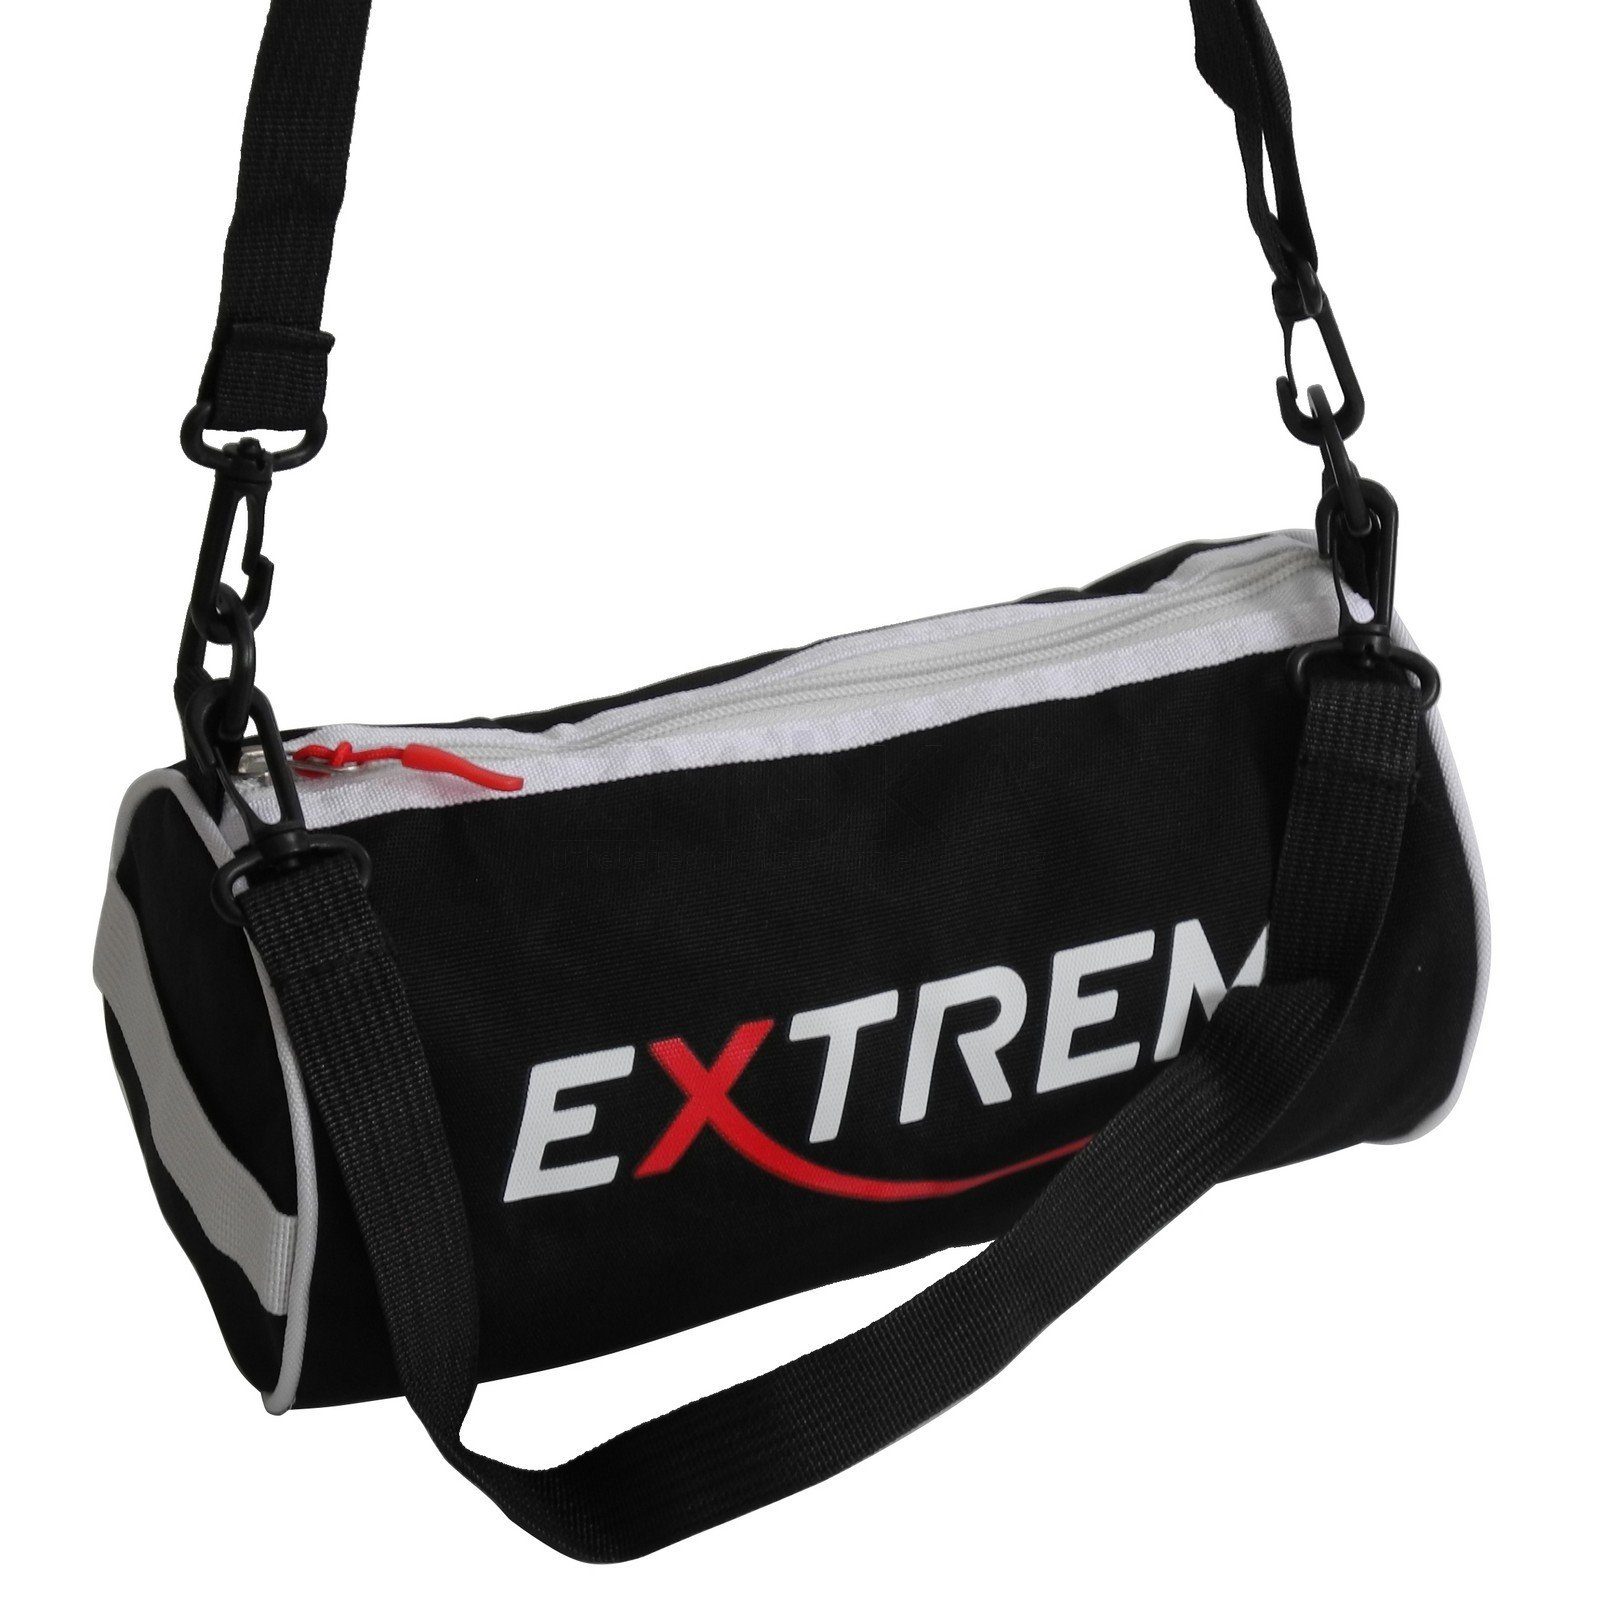 Uni Bag Auswahl - Schwarz Street Crossbody BAG Umhängetasche STREET Extreme Bag Umhängetasche